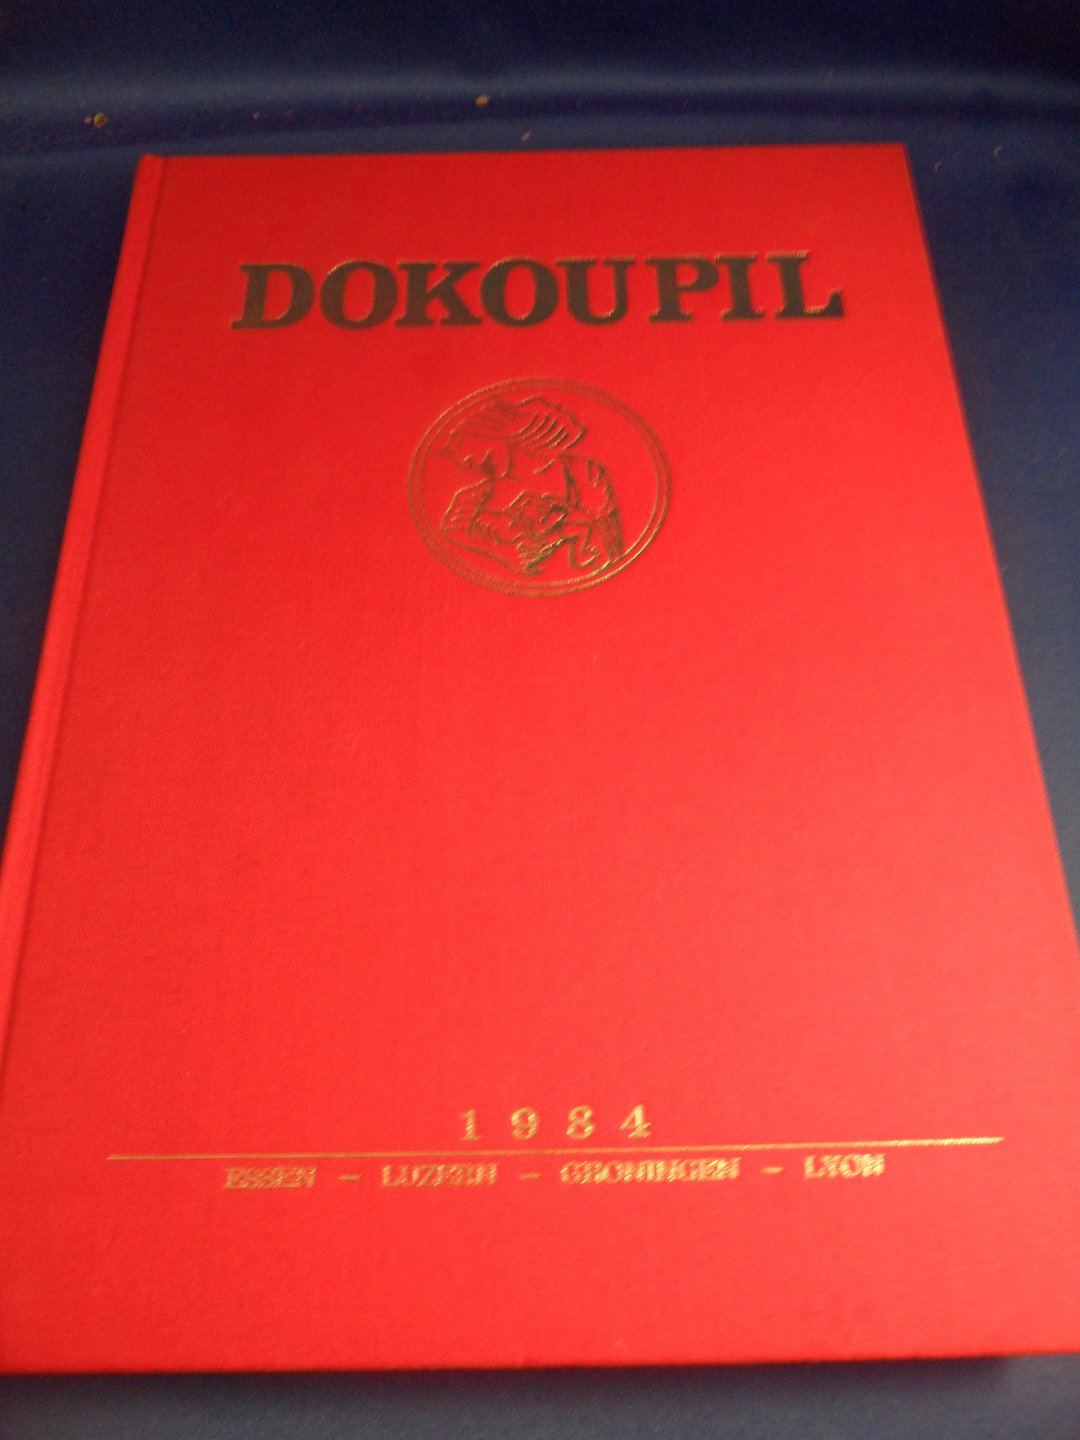 Dokoupil, Jiri Georg - Dokoupil. Arbeiten/ Travaux/ Works 1981 - 1984